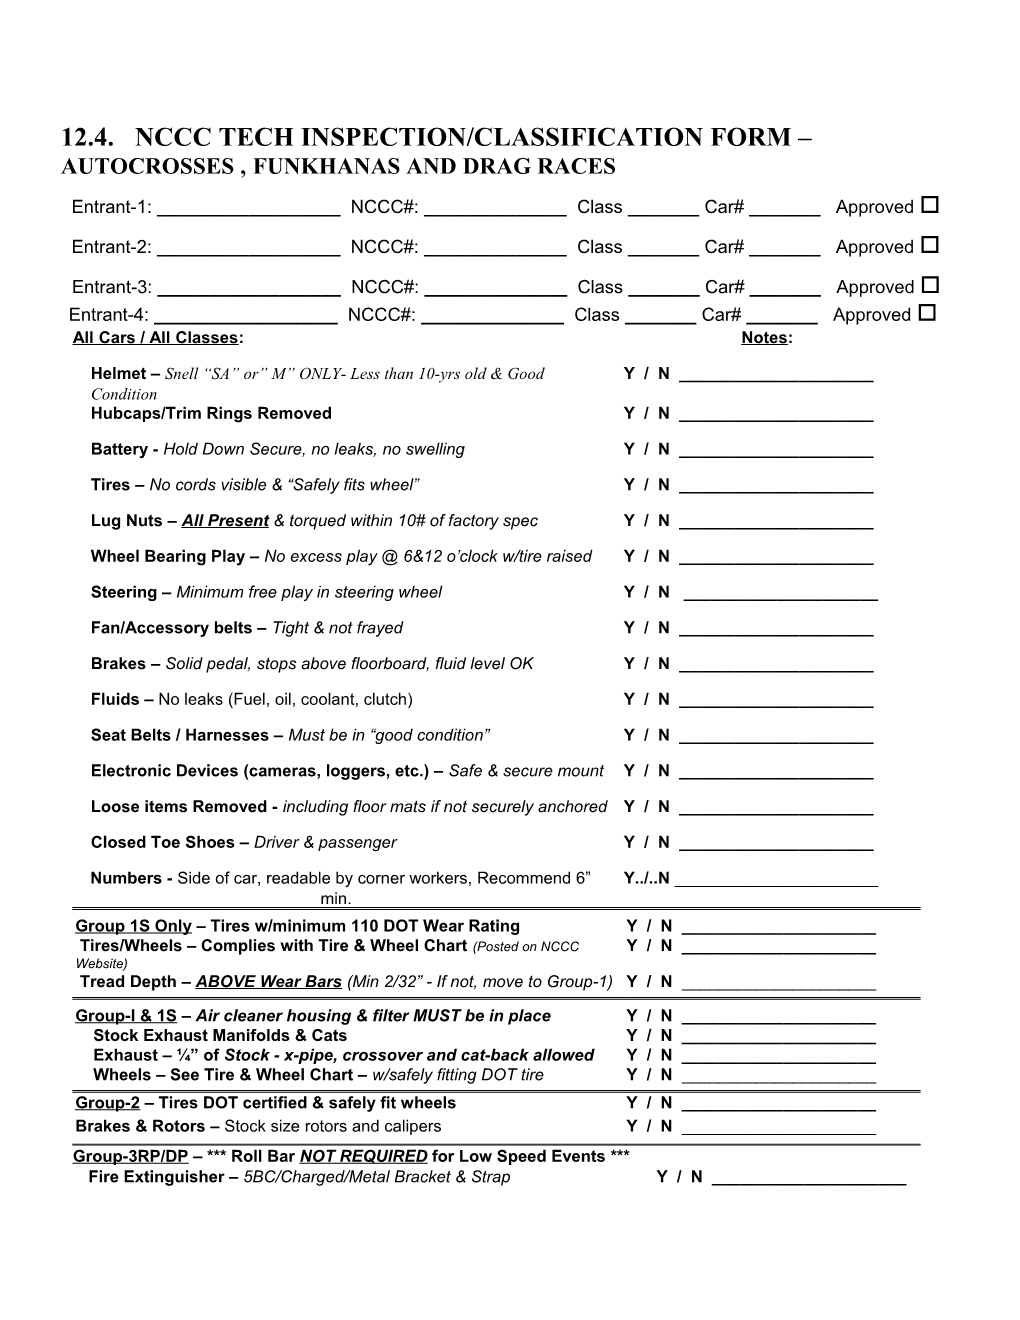 NCCC 2013 Rulebook Form 12.4